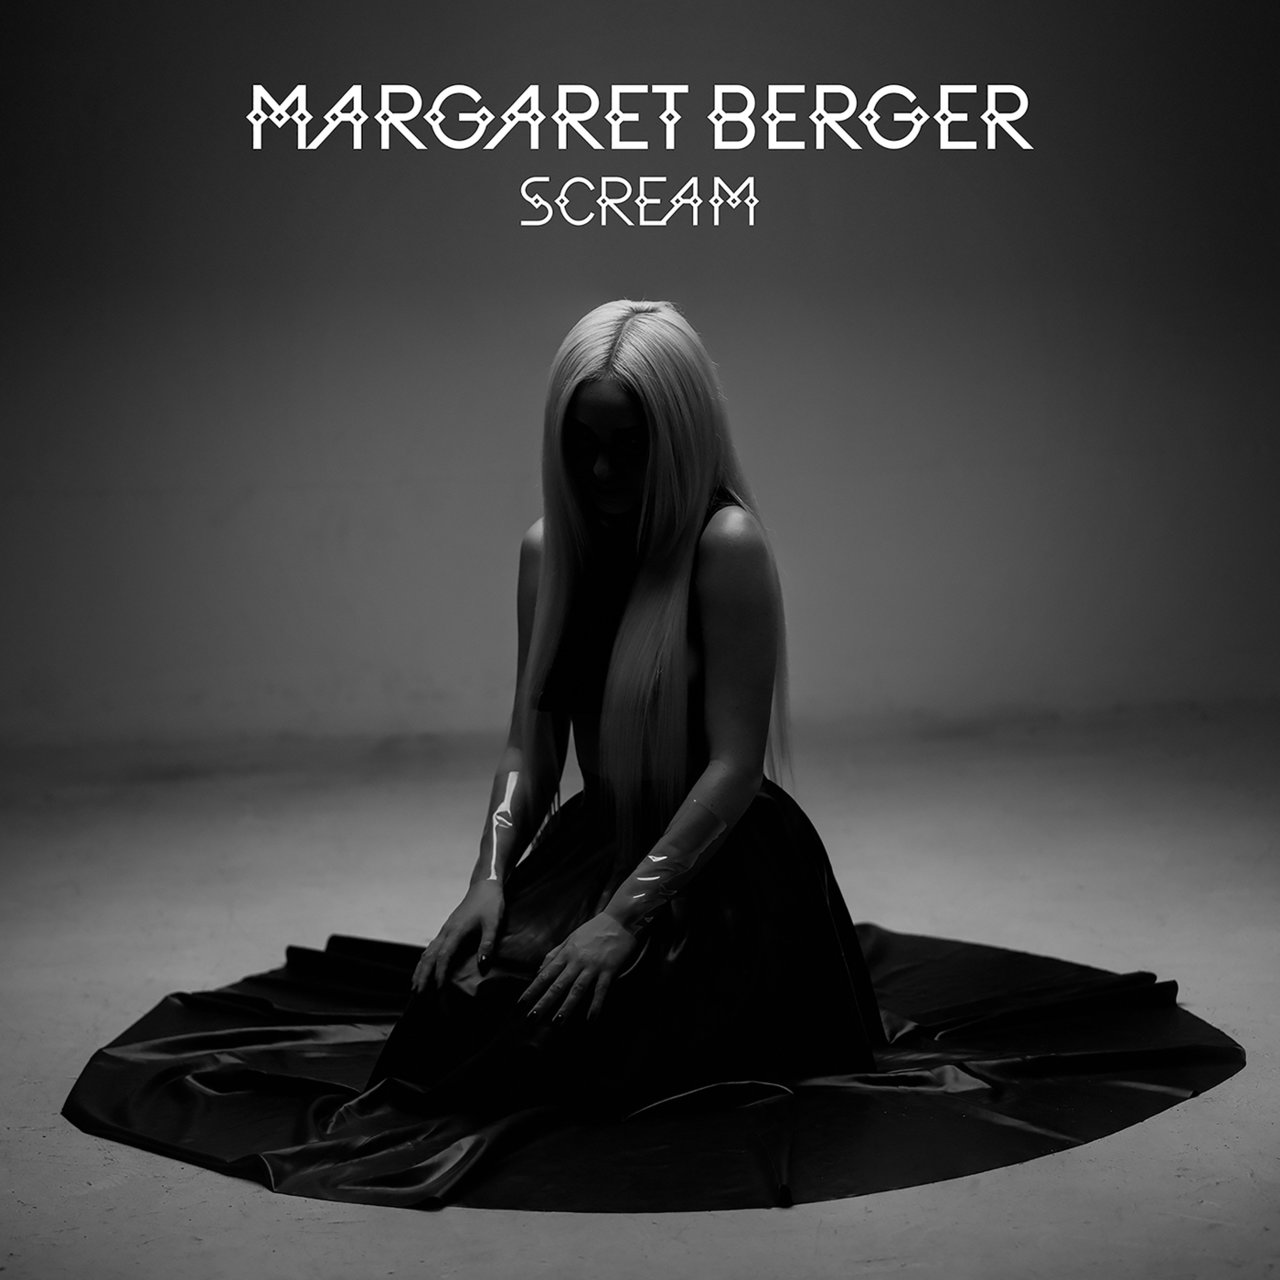 Margaret Berger Scream cover artwork